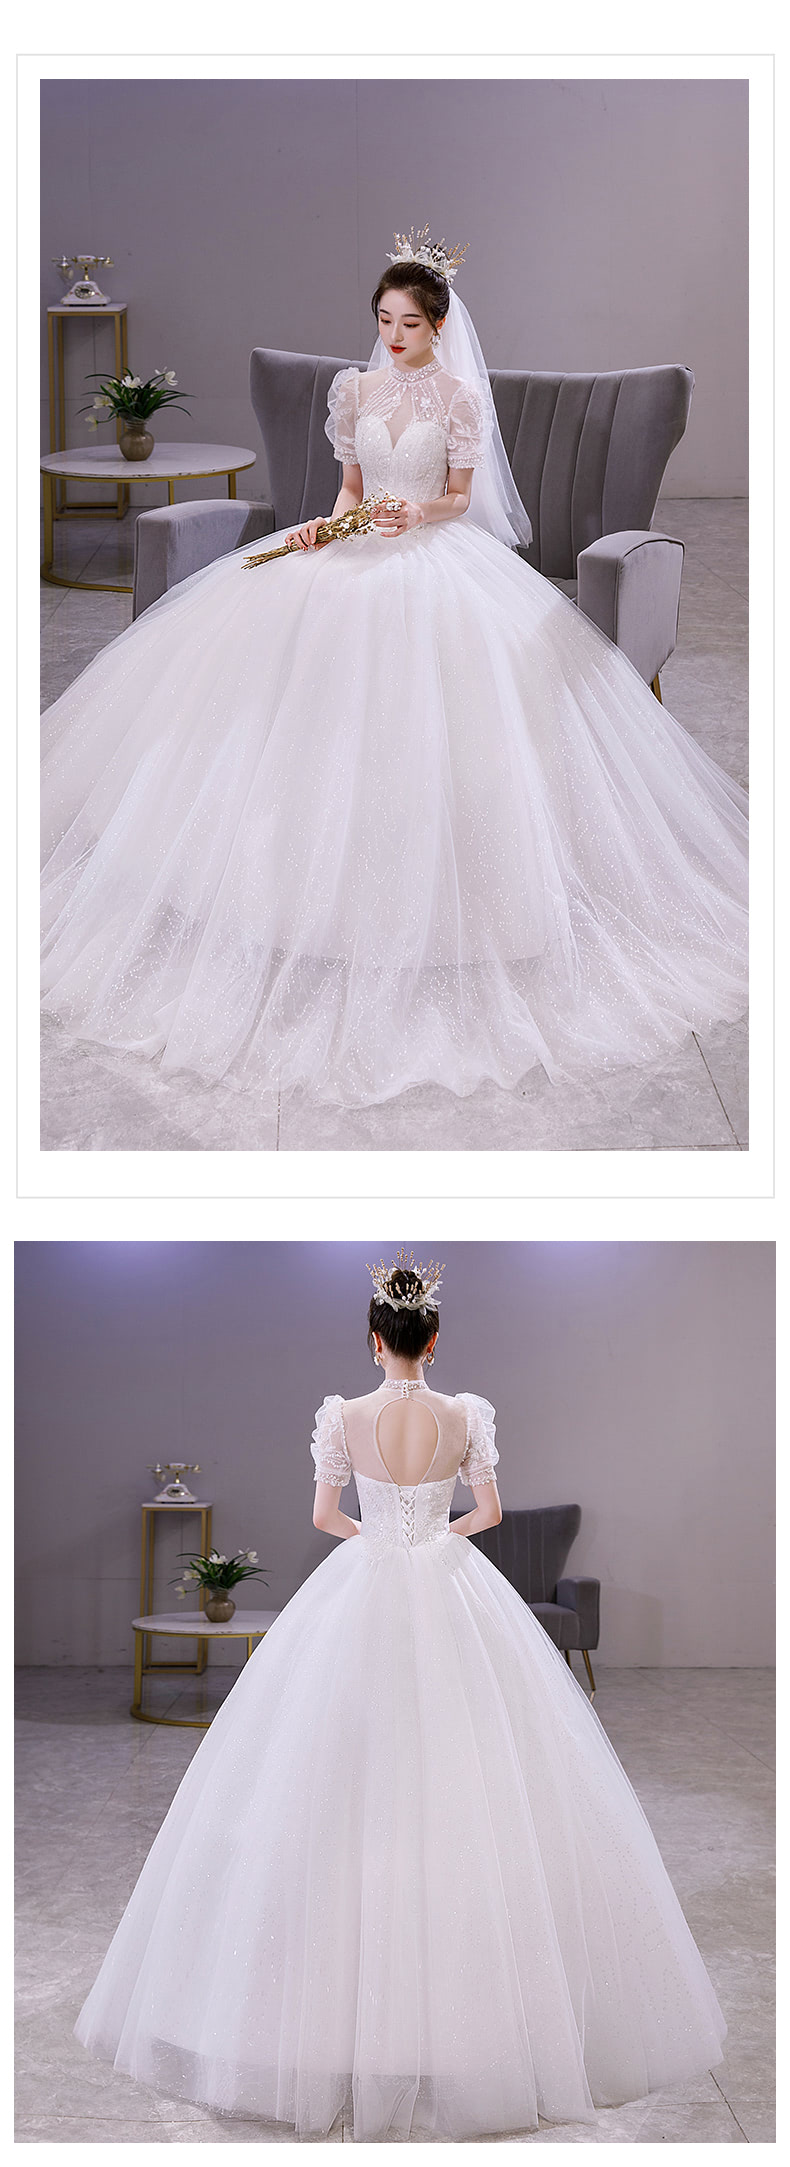 Simple-Romantic-Puff-Sleeve-White-Tulle-Wedding-Bridal-Long-Dress11.jpg